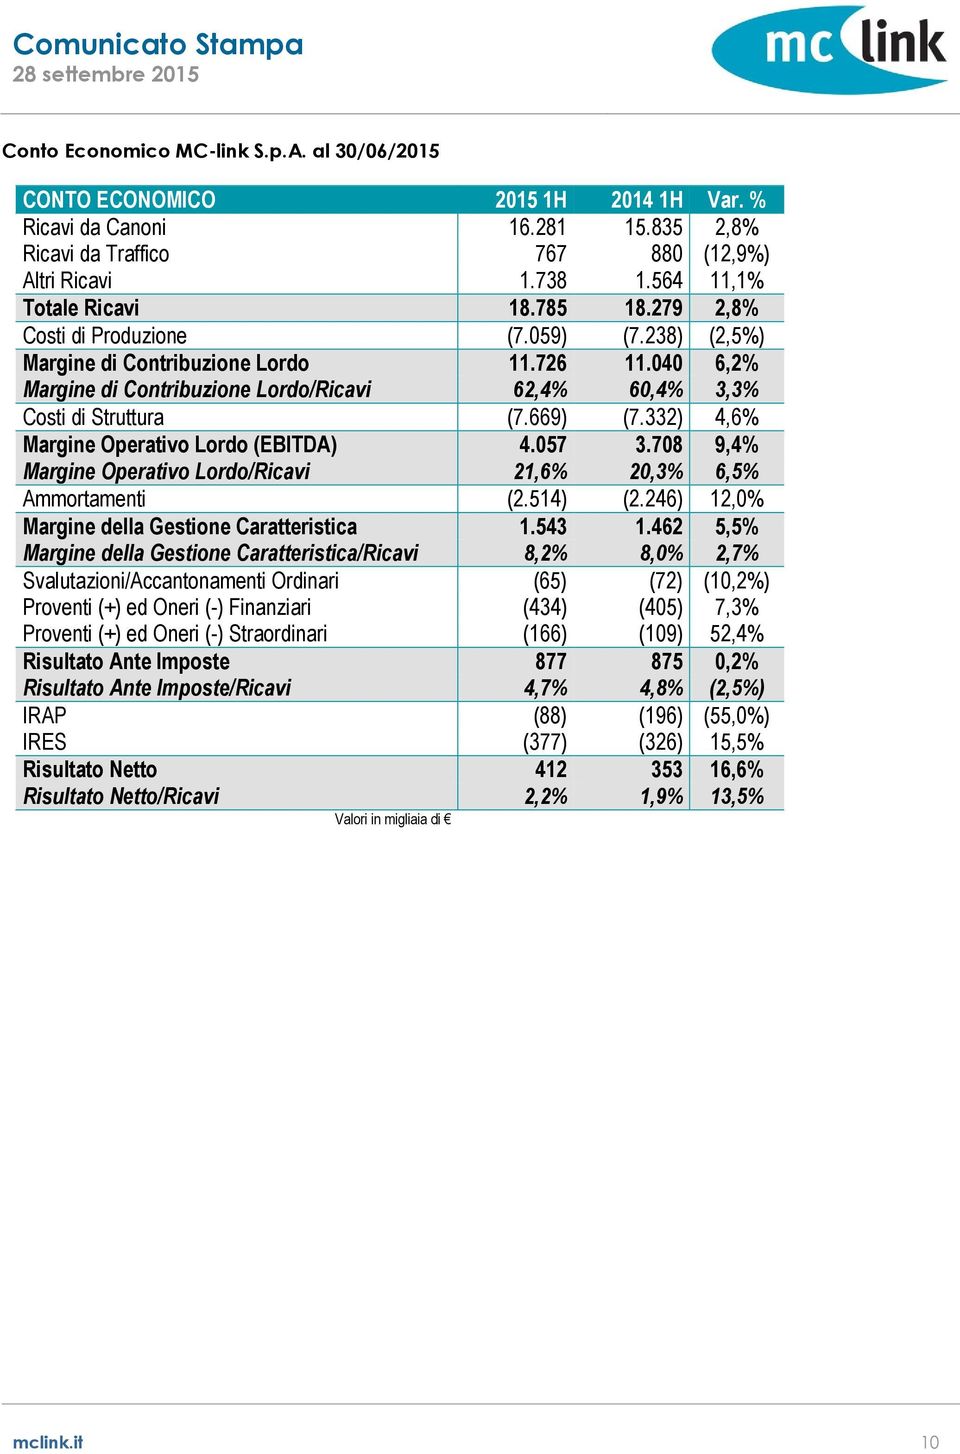 040 6,2% Margine di Contribuzione Lordo/Ricavi 62,4% 60,4% 3,3% Costi di Struttura (7.669) (7.332) 4,6% Margine Operativo Lordo (EBITDA) 4.057 3.